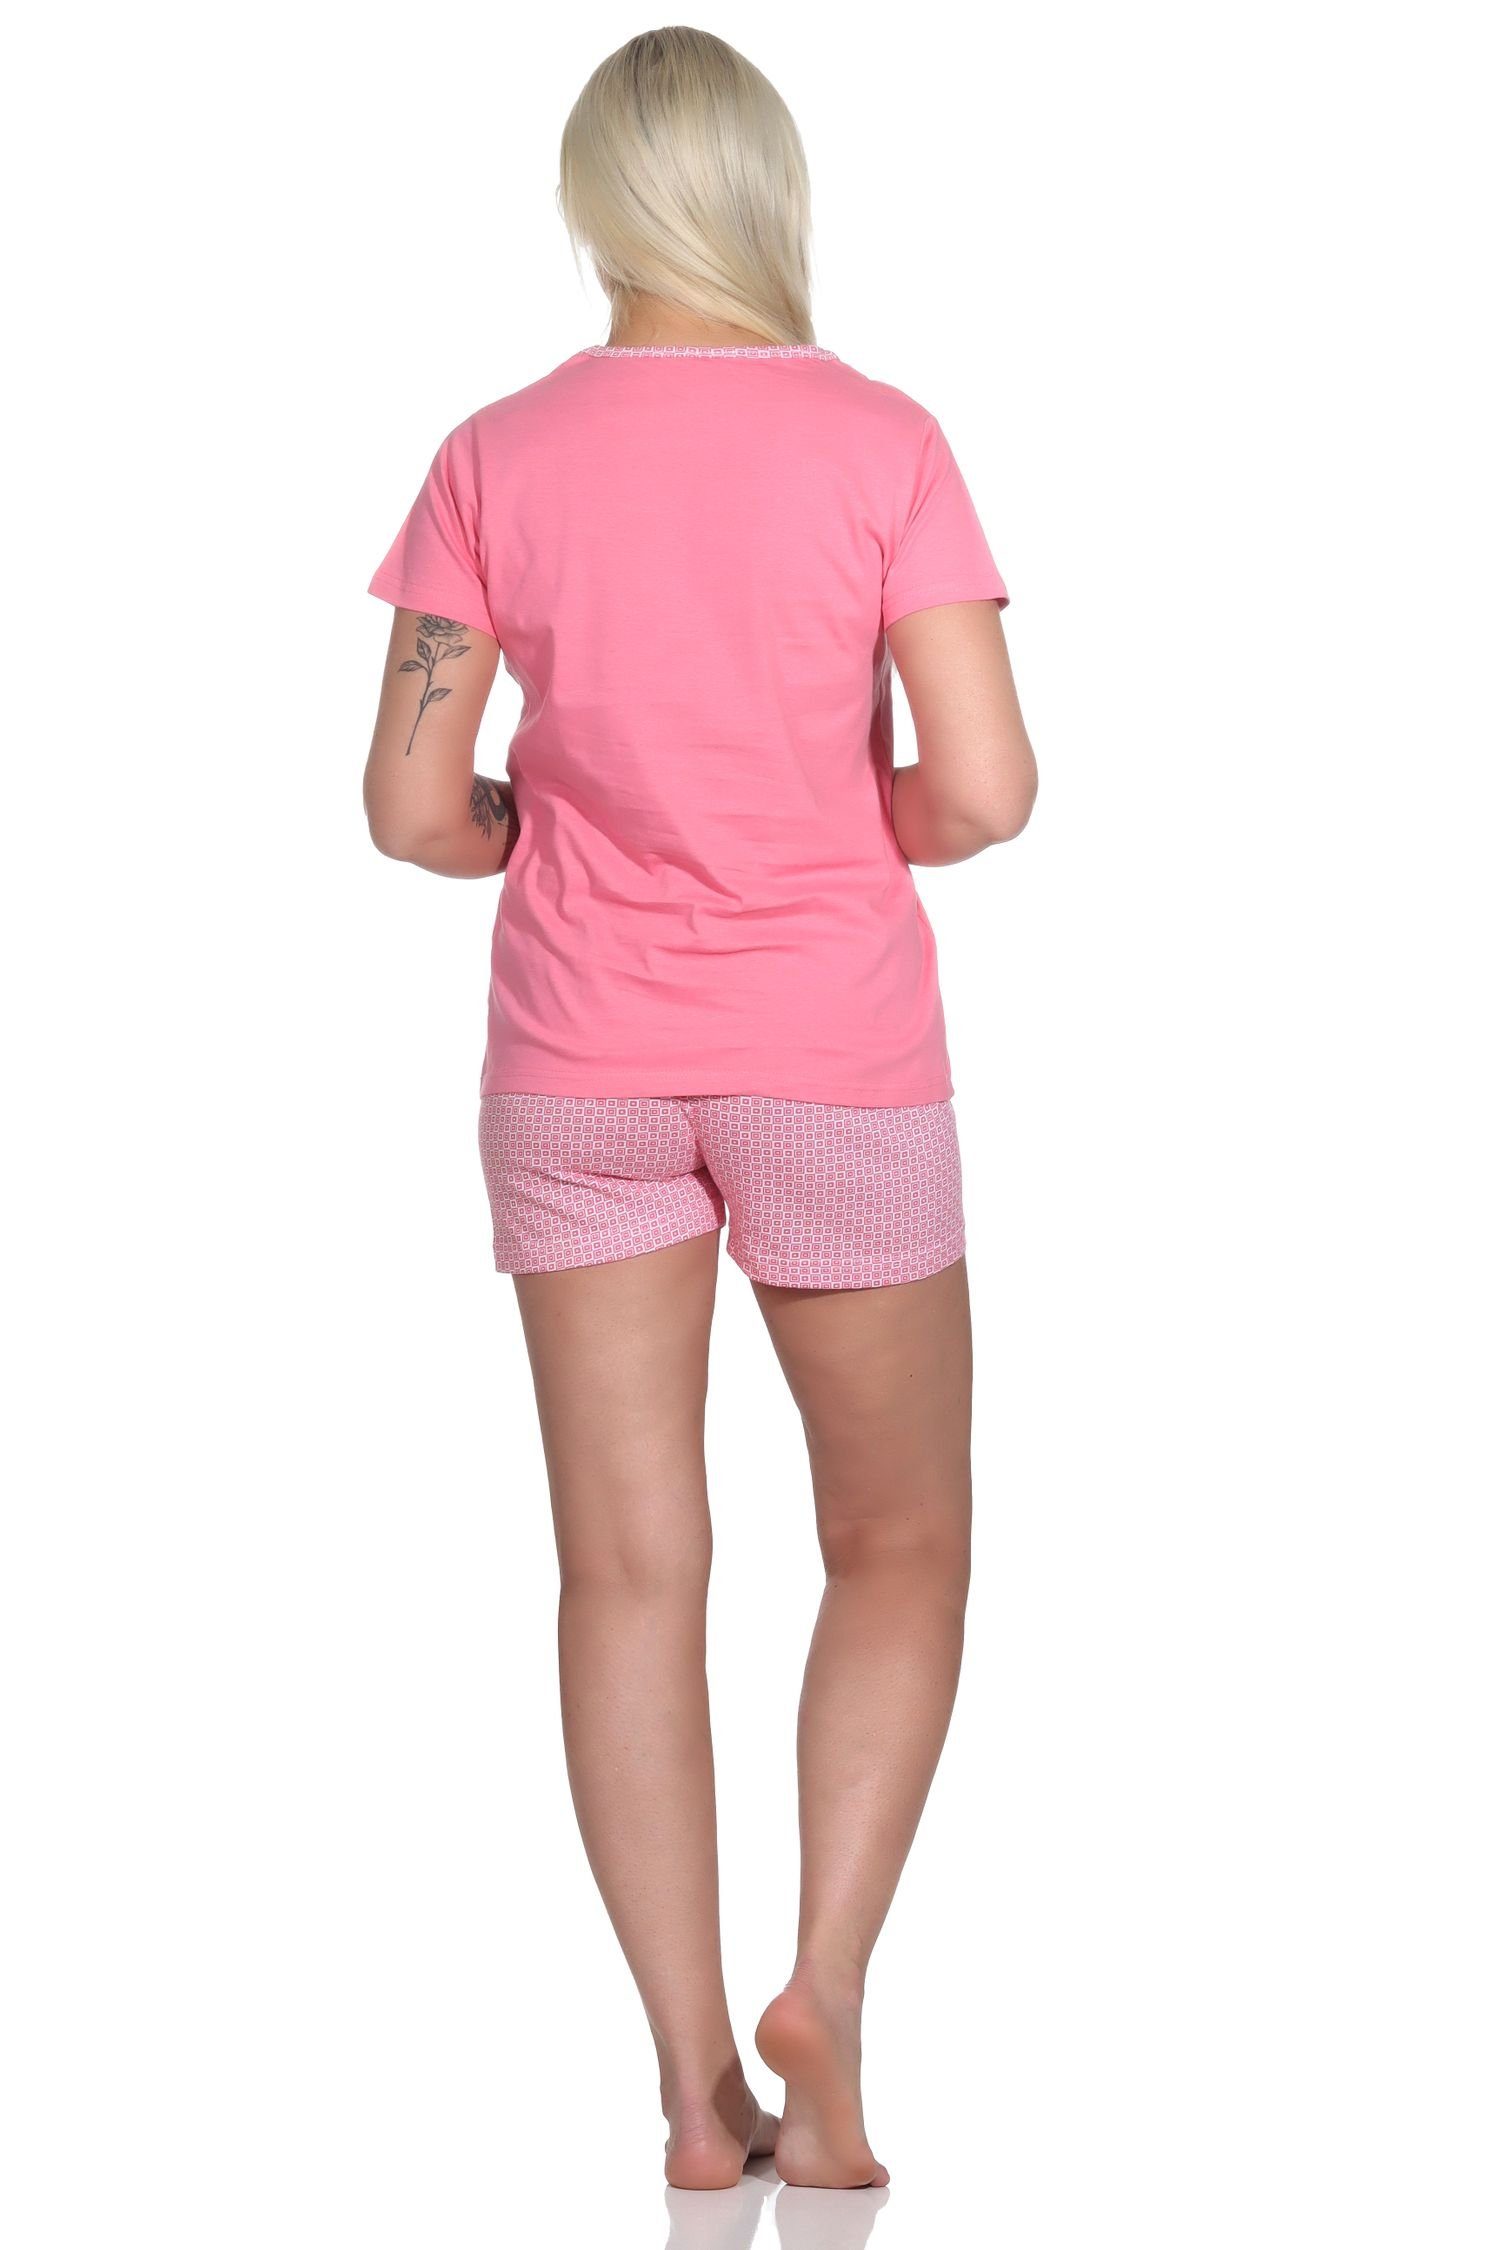 RELAX by Luftballon-Motiv Normann und Damen mit Shorty, Pyjama Pyjama pink kurzer Minimal-Print